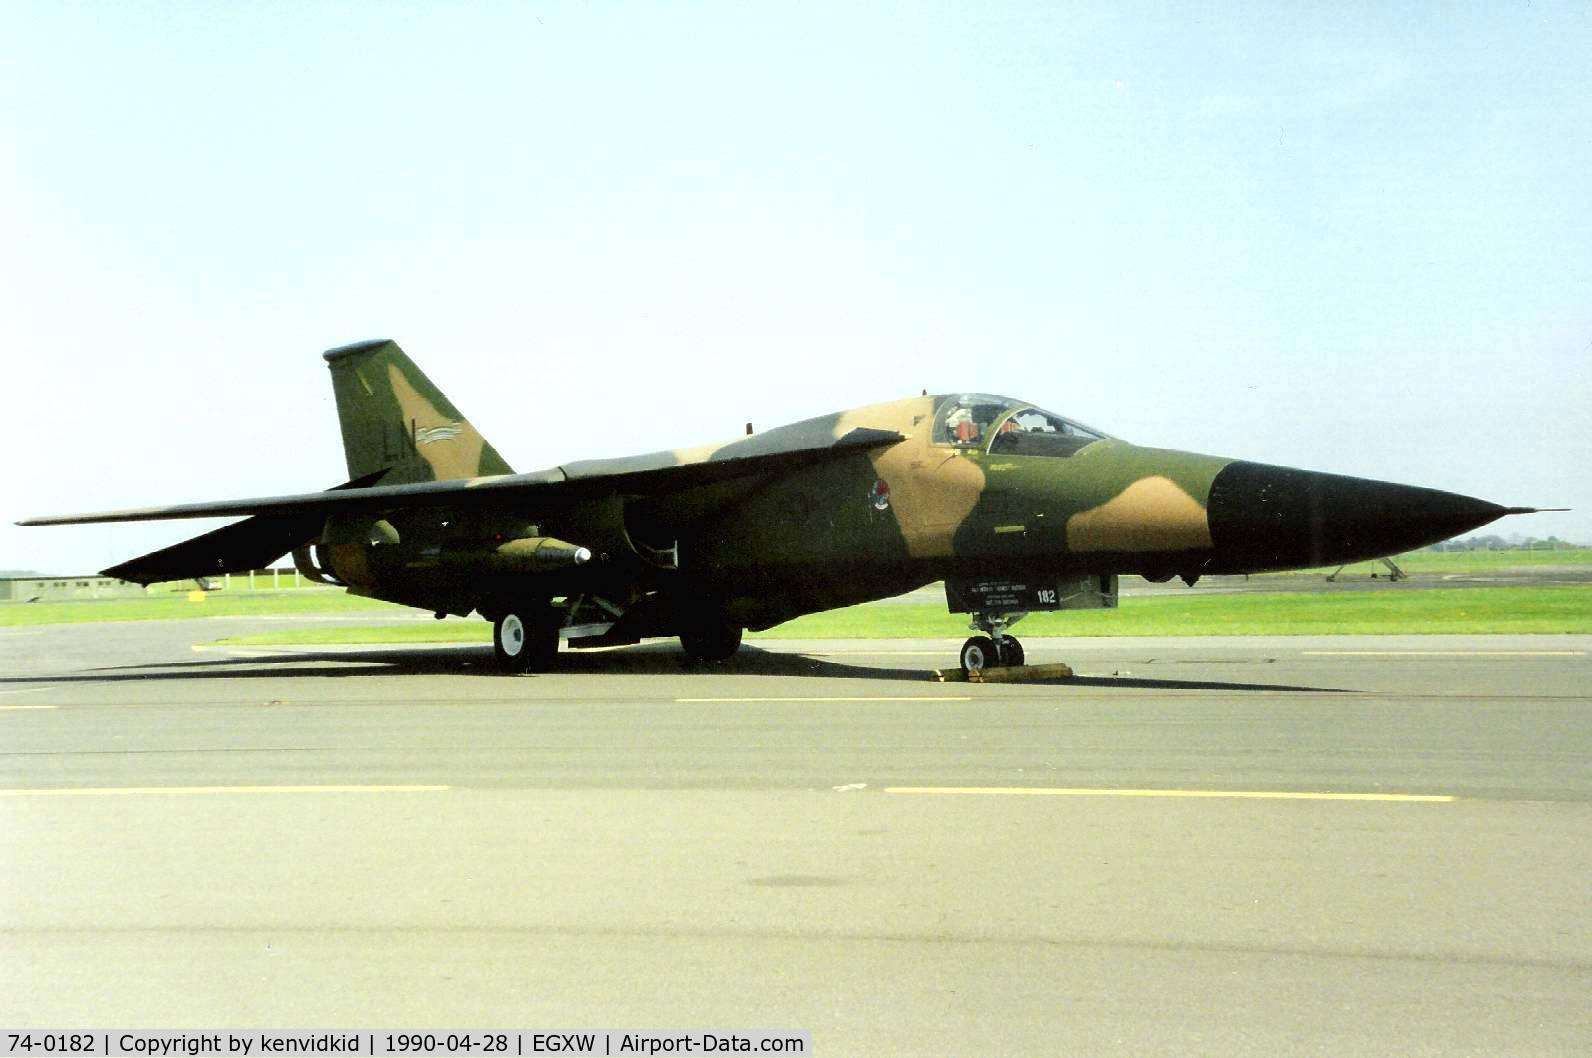 74-0182, 1974 General Dynamics F-111F Aardvark C/N E2-100, At the Waddington 1990 photocall.